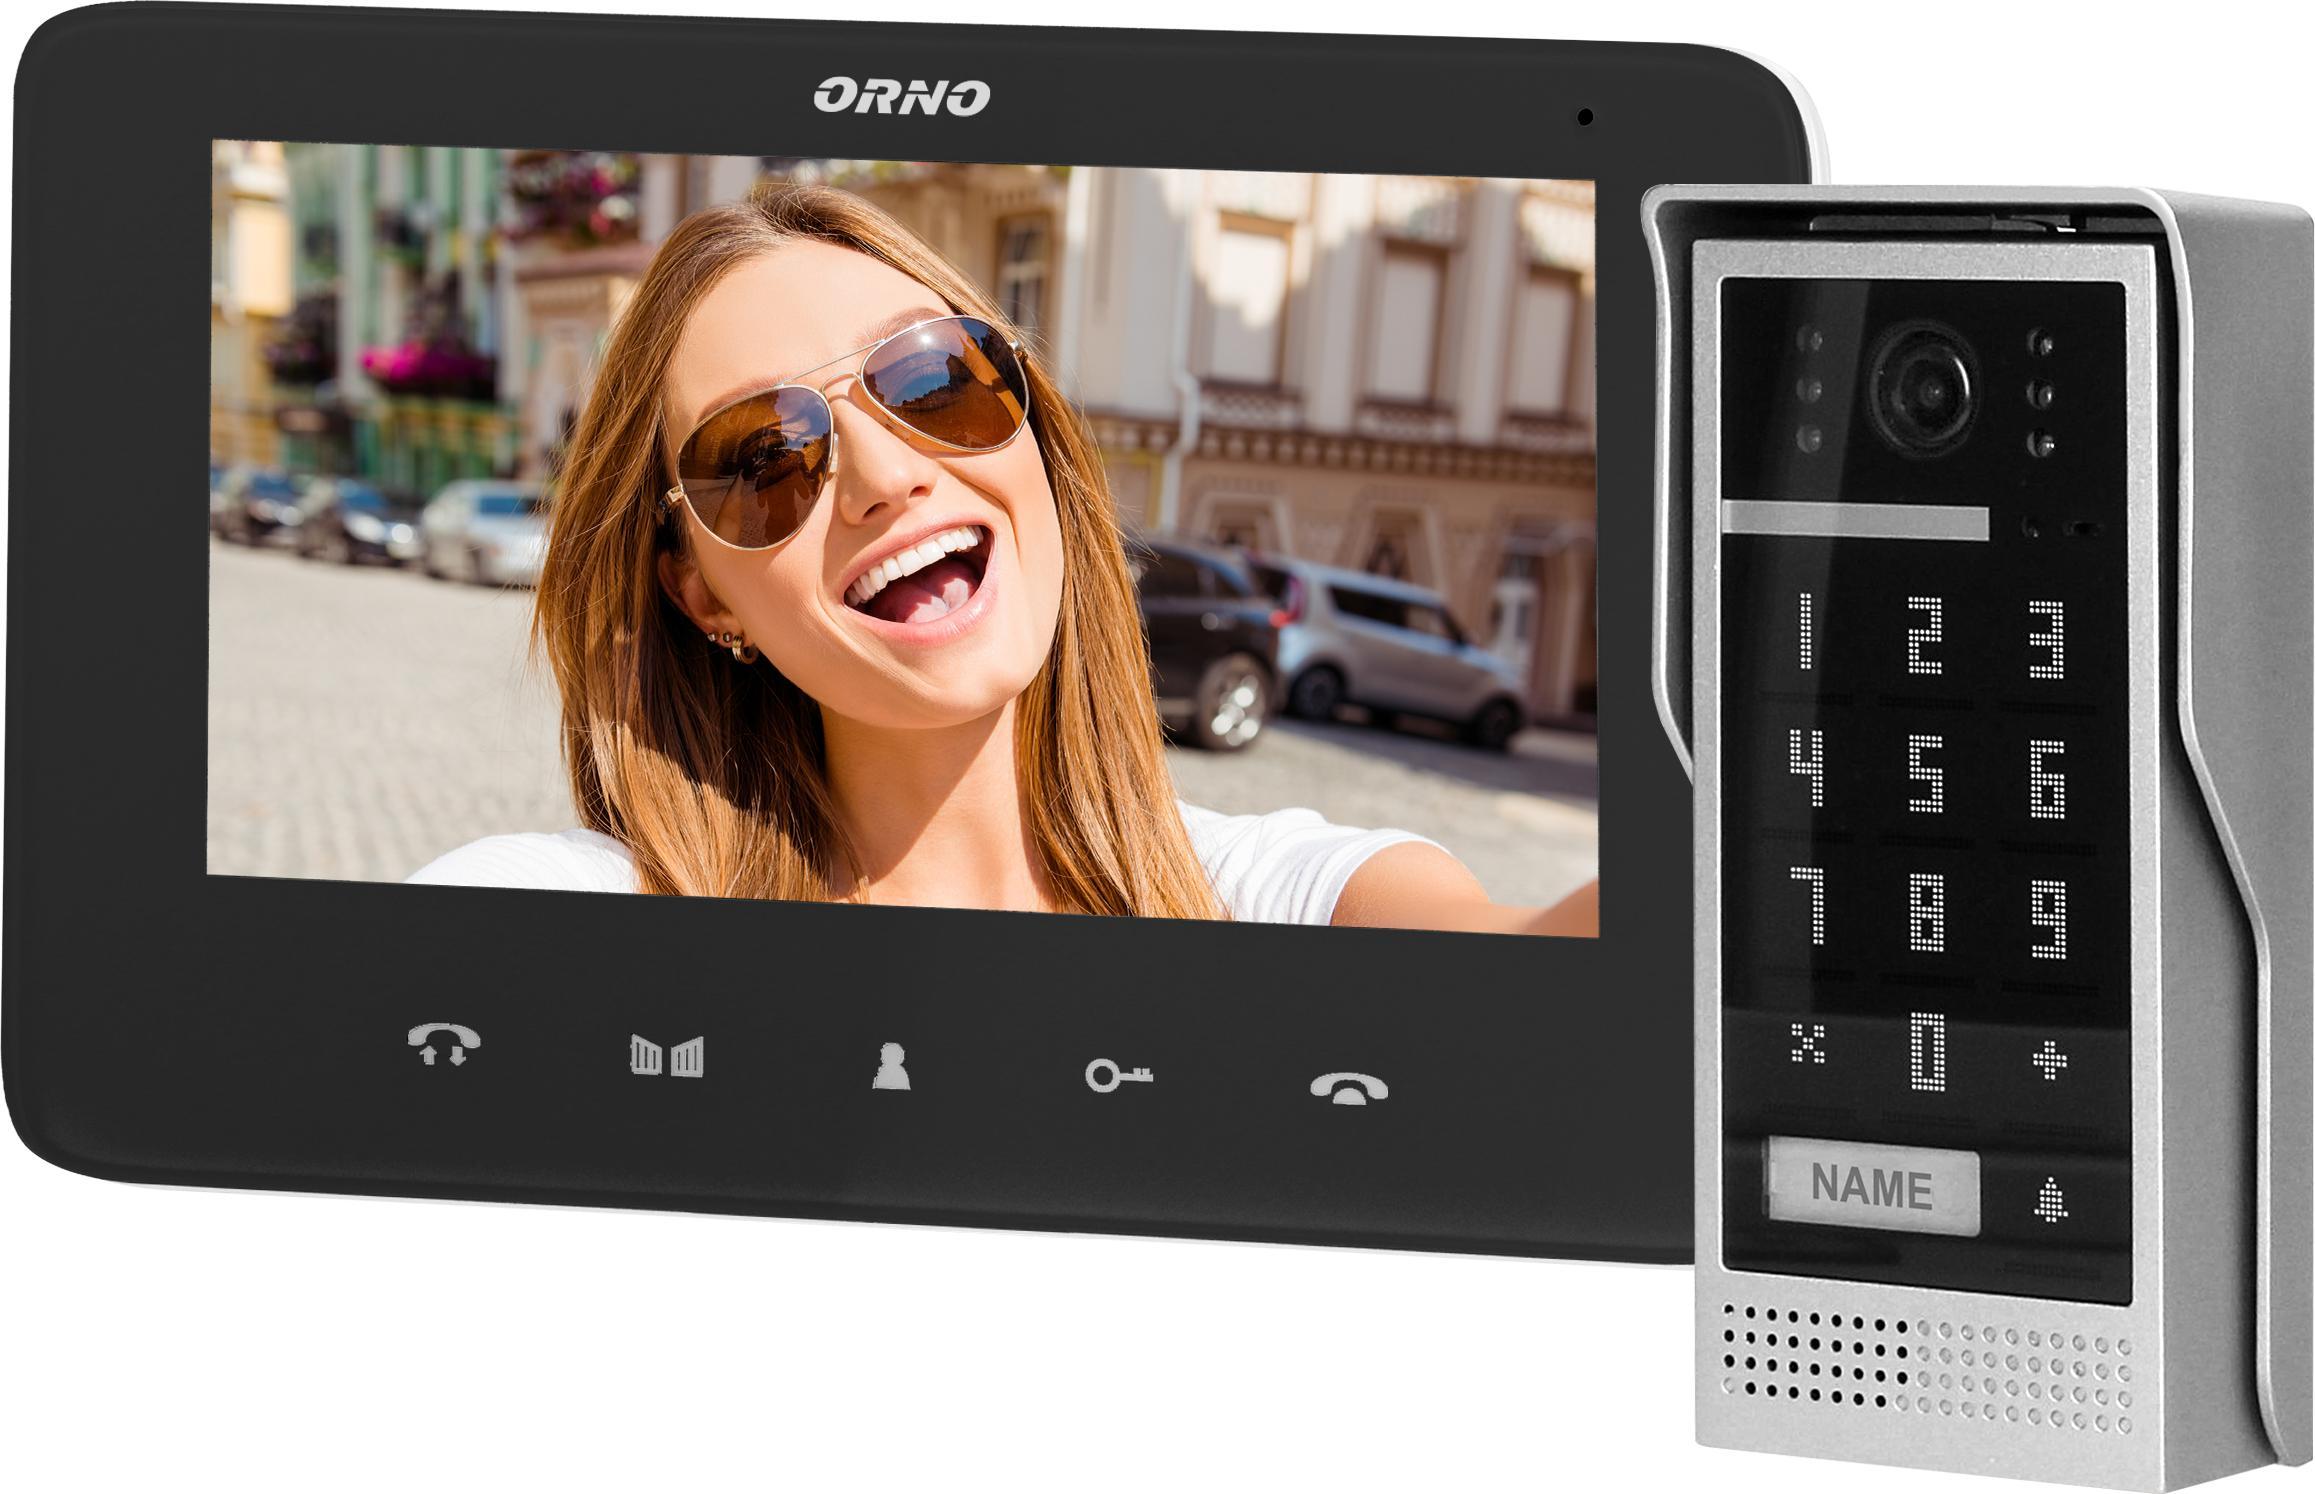 Videointerfon pentru o familie SCUTI ORNO OR-VID-VP-1073/B, color, monitor ultra-plat LCD 7`, control automat al portilor, 16 sonerii, functie intercom, tastatura numerica, negru/gri